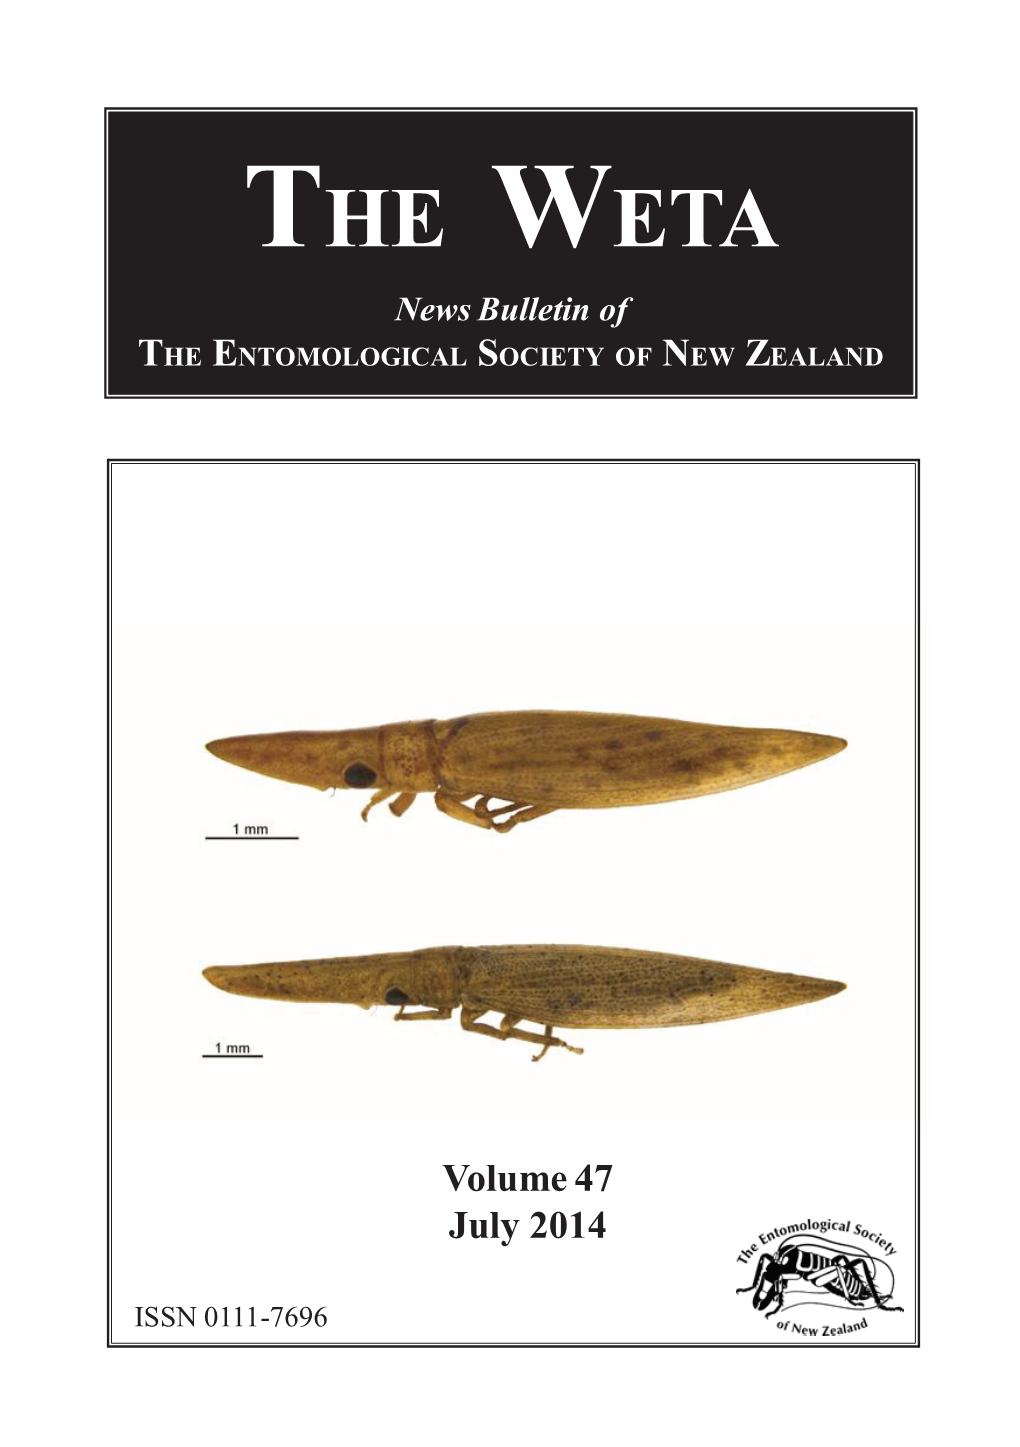 THE WETA News Bulletin of the ENTOMOLOGICAL SOCIETY of NEW ZEALAND